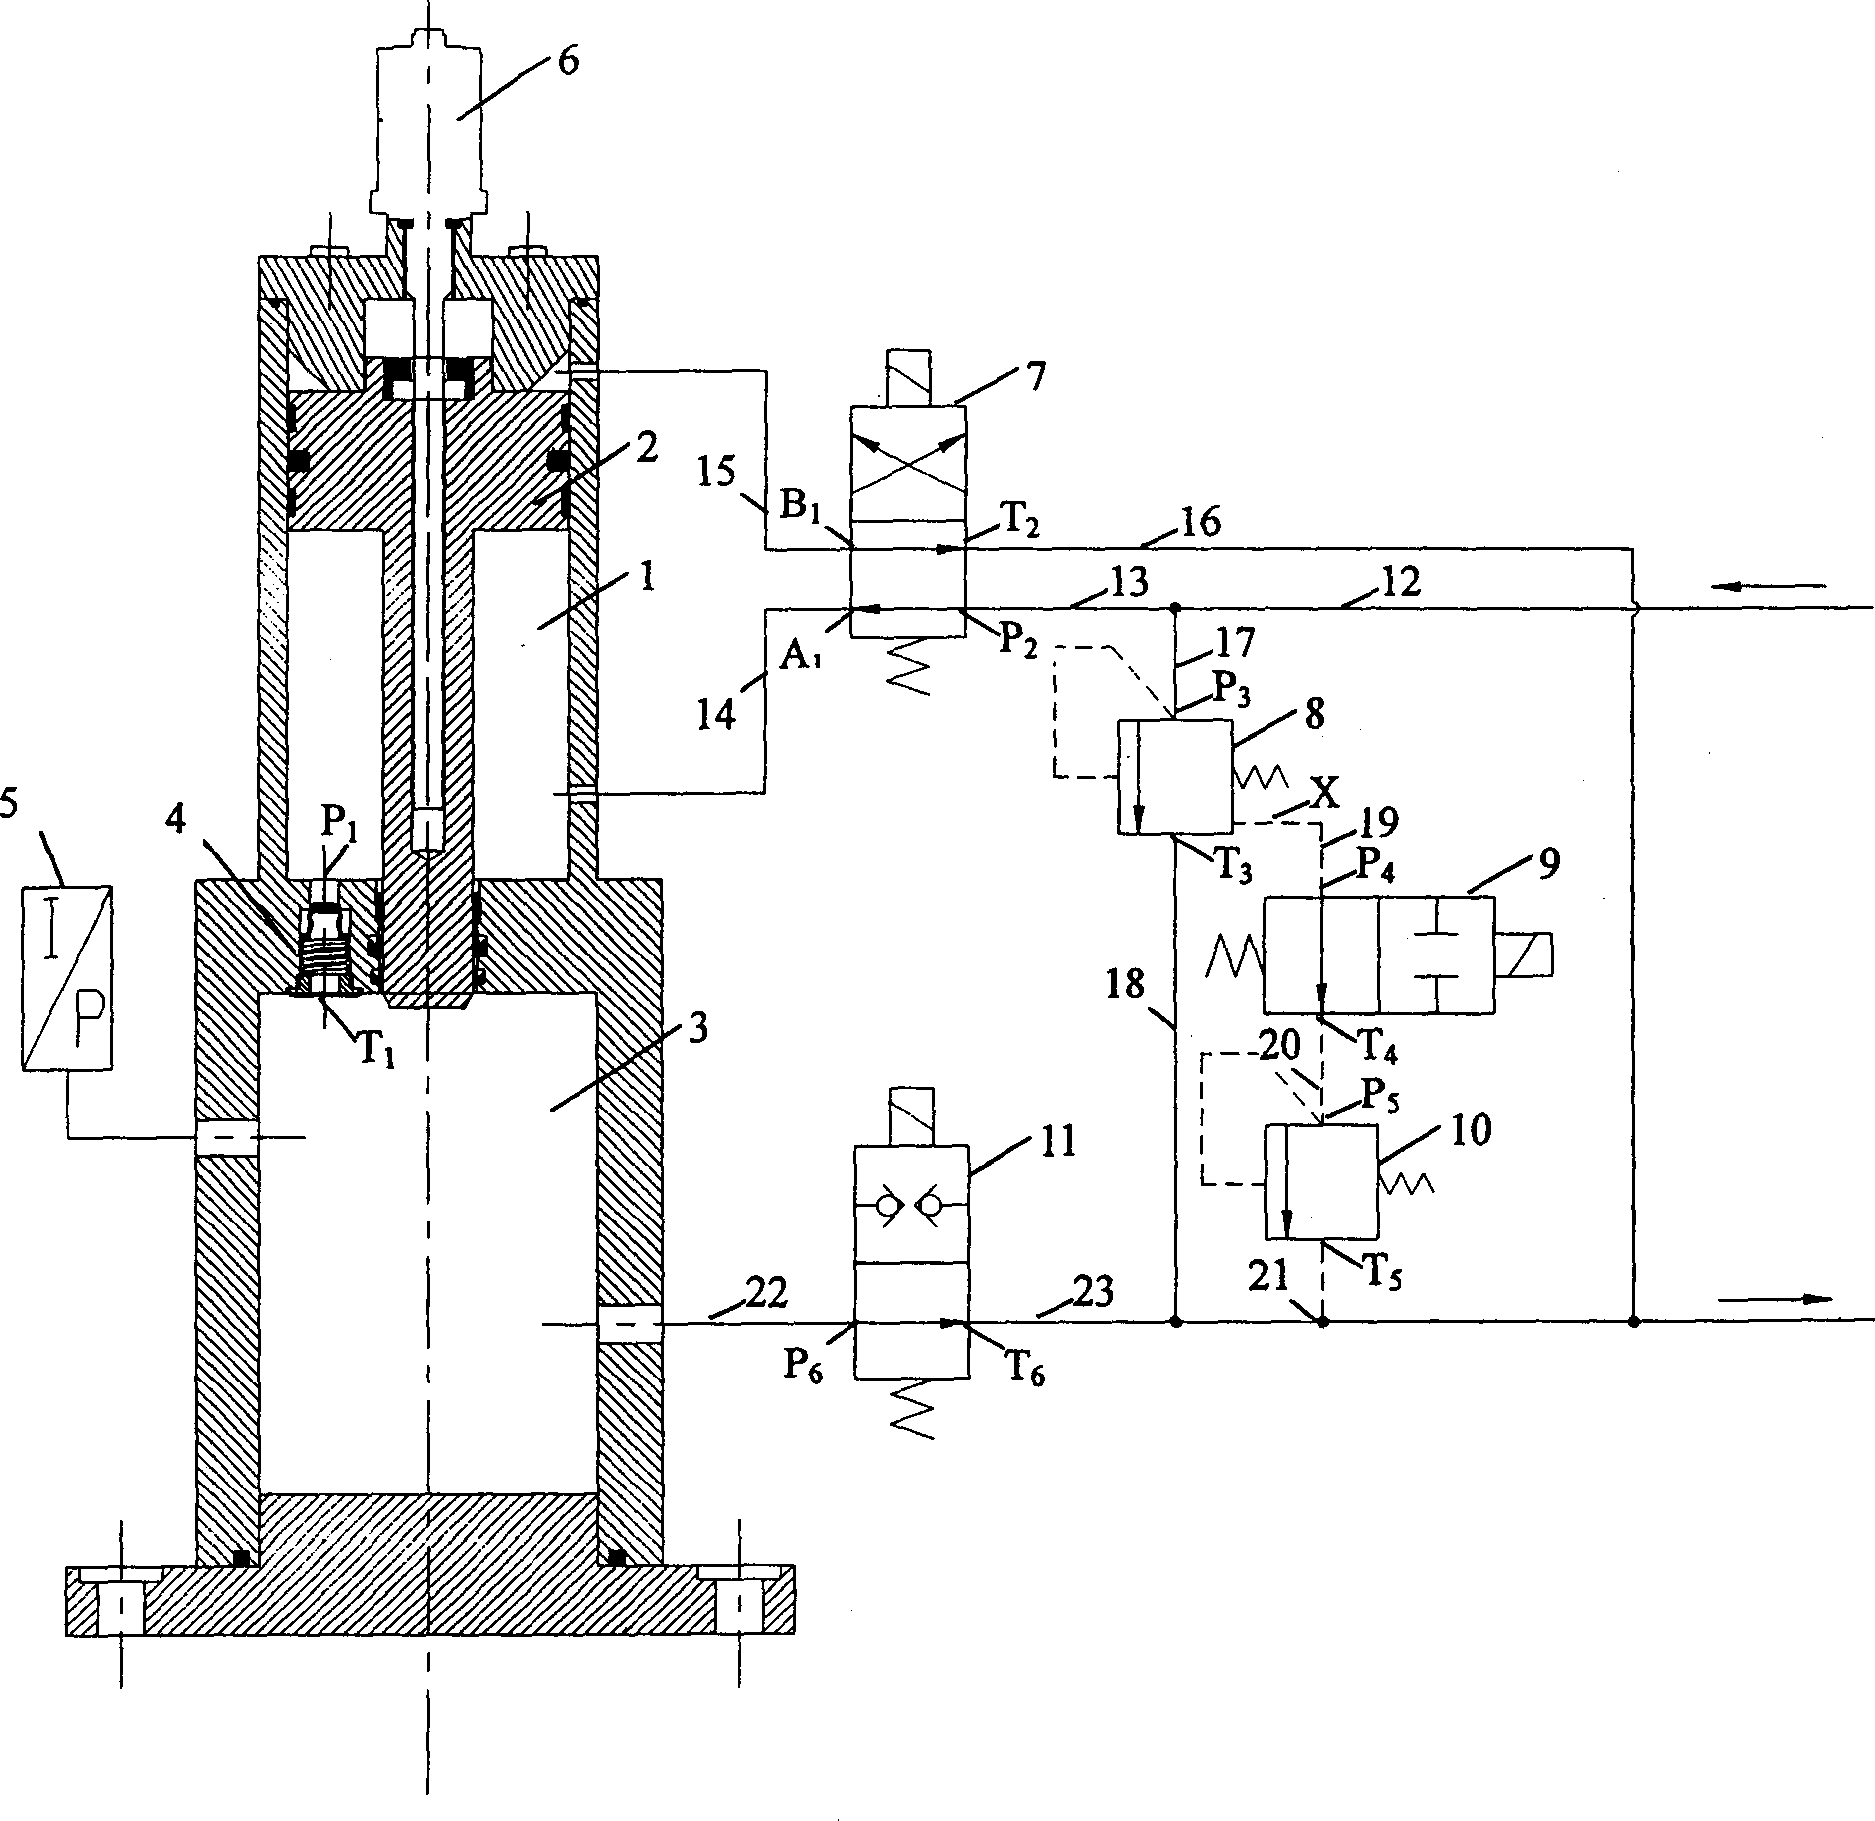 Oil elastic modulus detector based on volume elastic modulus definition